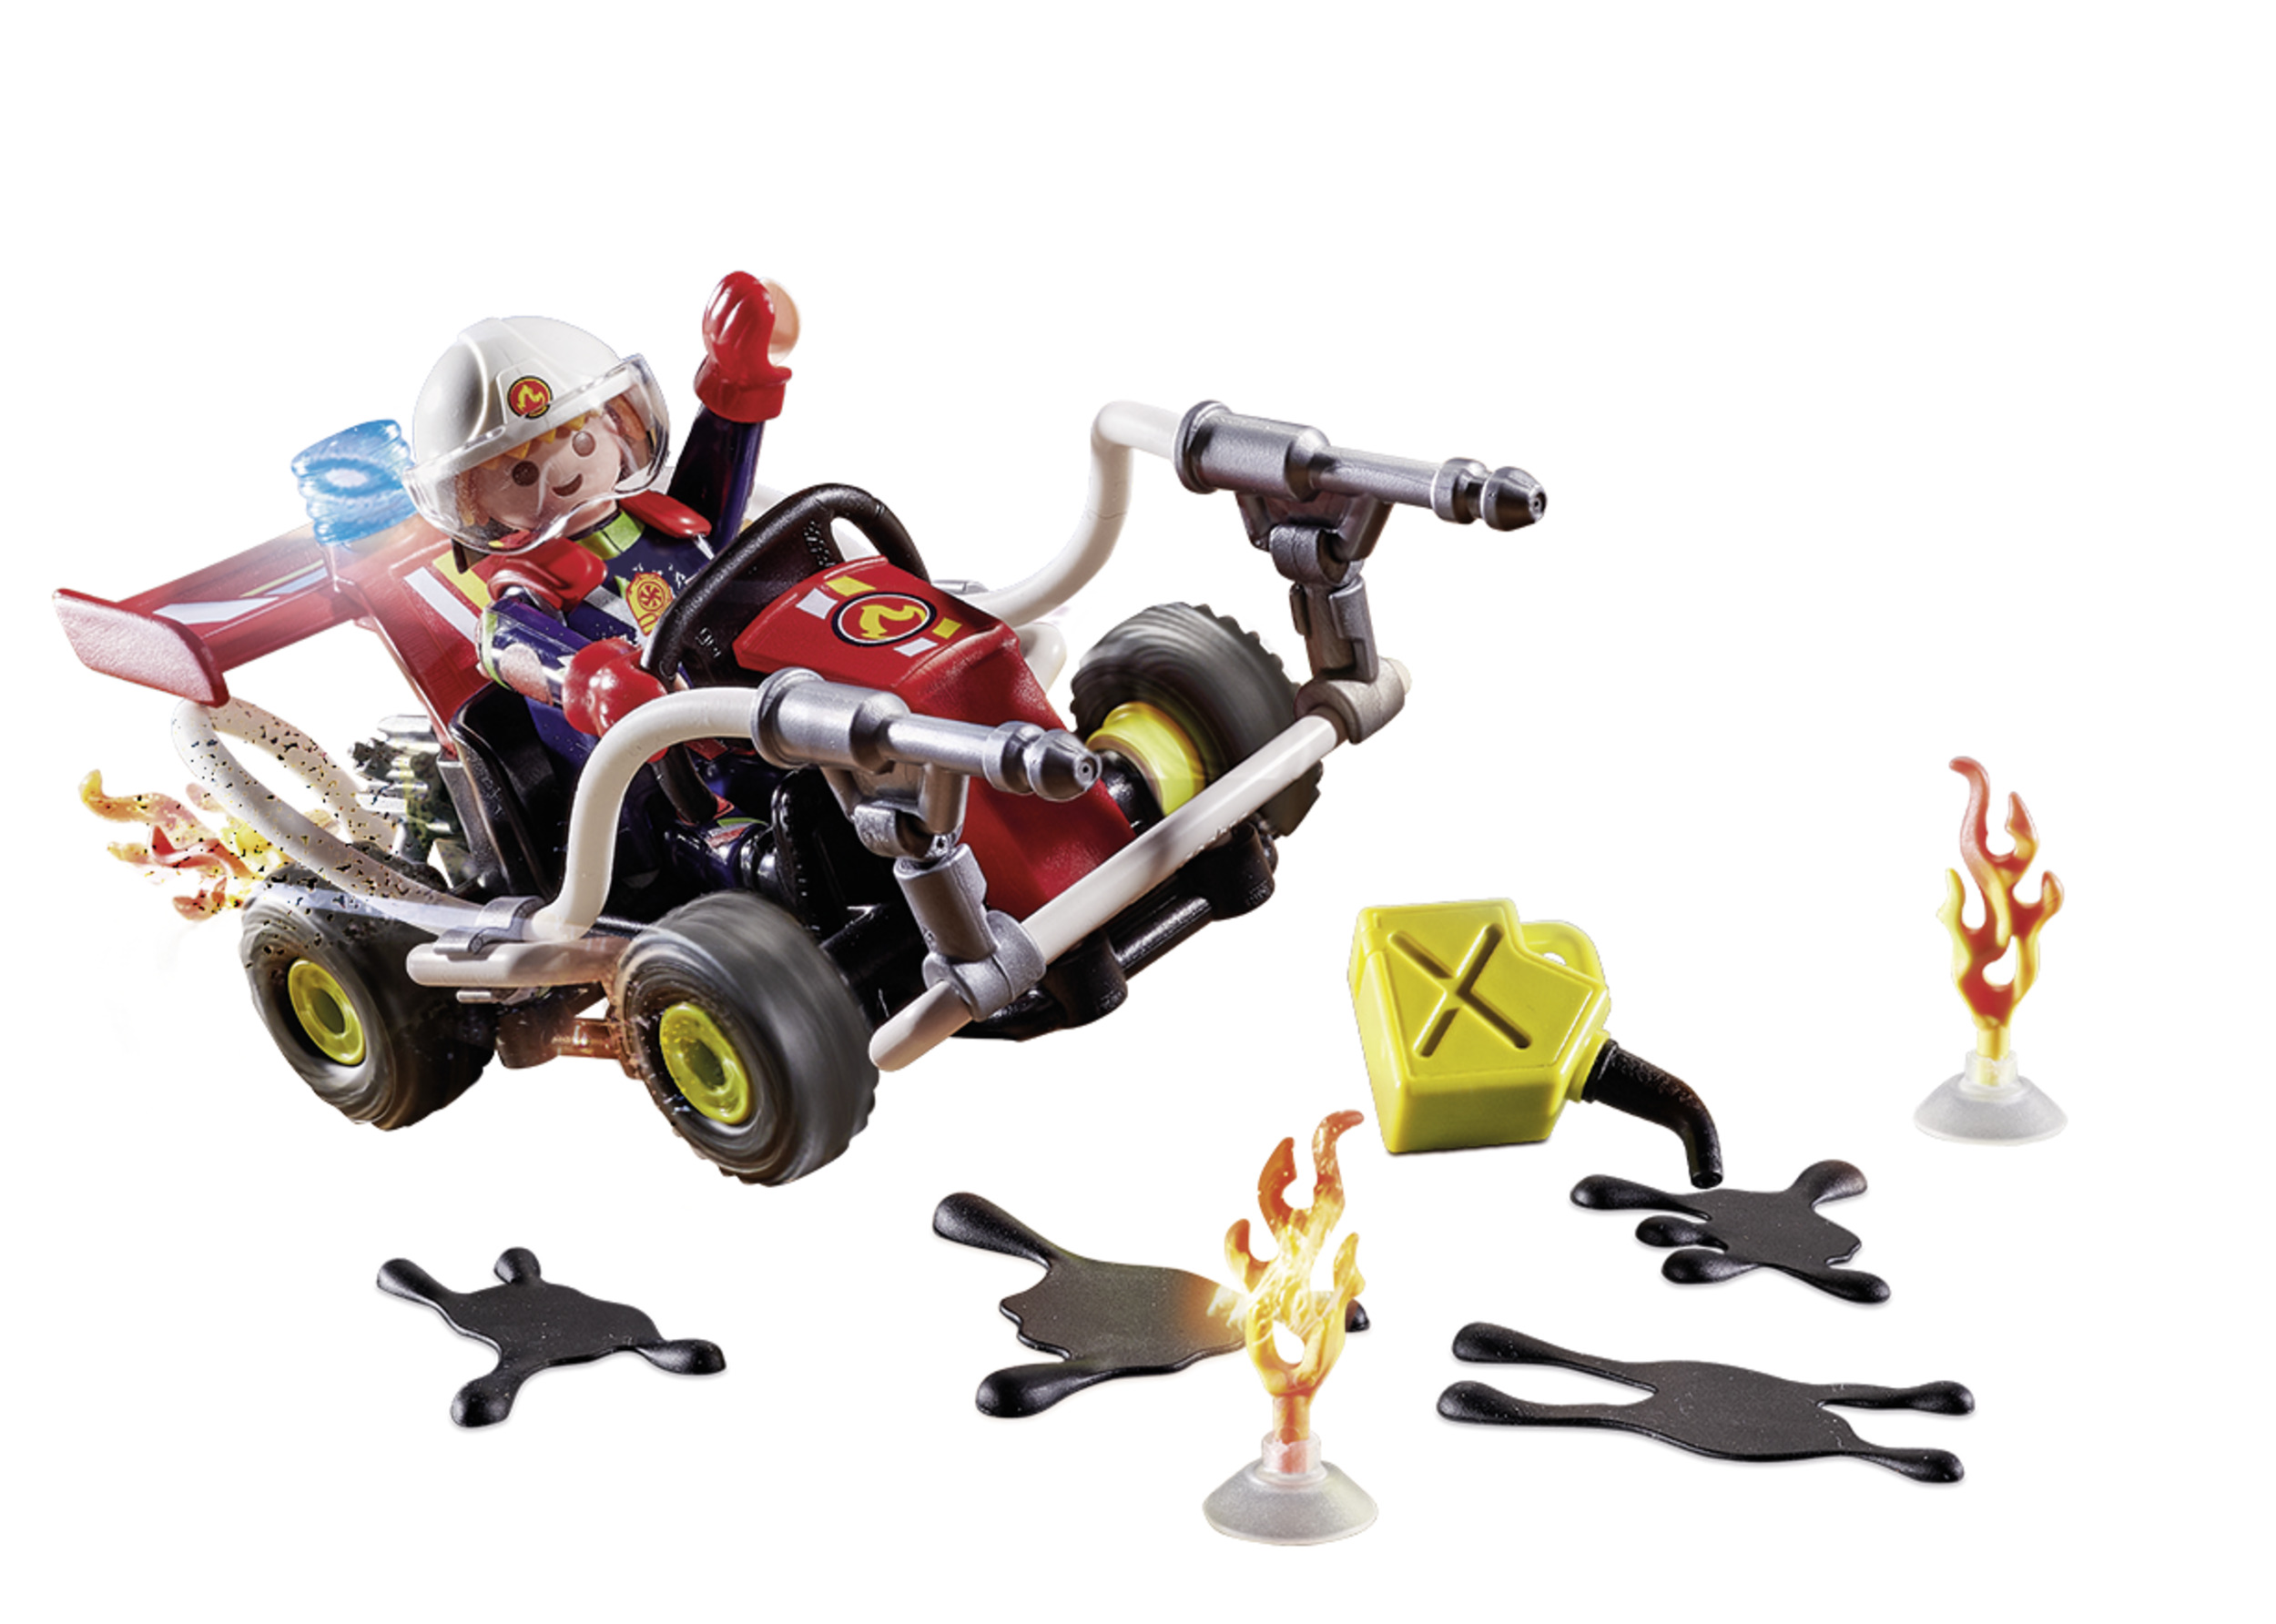 Playmobil Stunt Show Γουρούνα Πυροσβεστικής 70554 - Playmobil, Playmobil Stunt Show